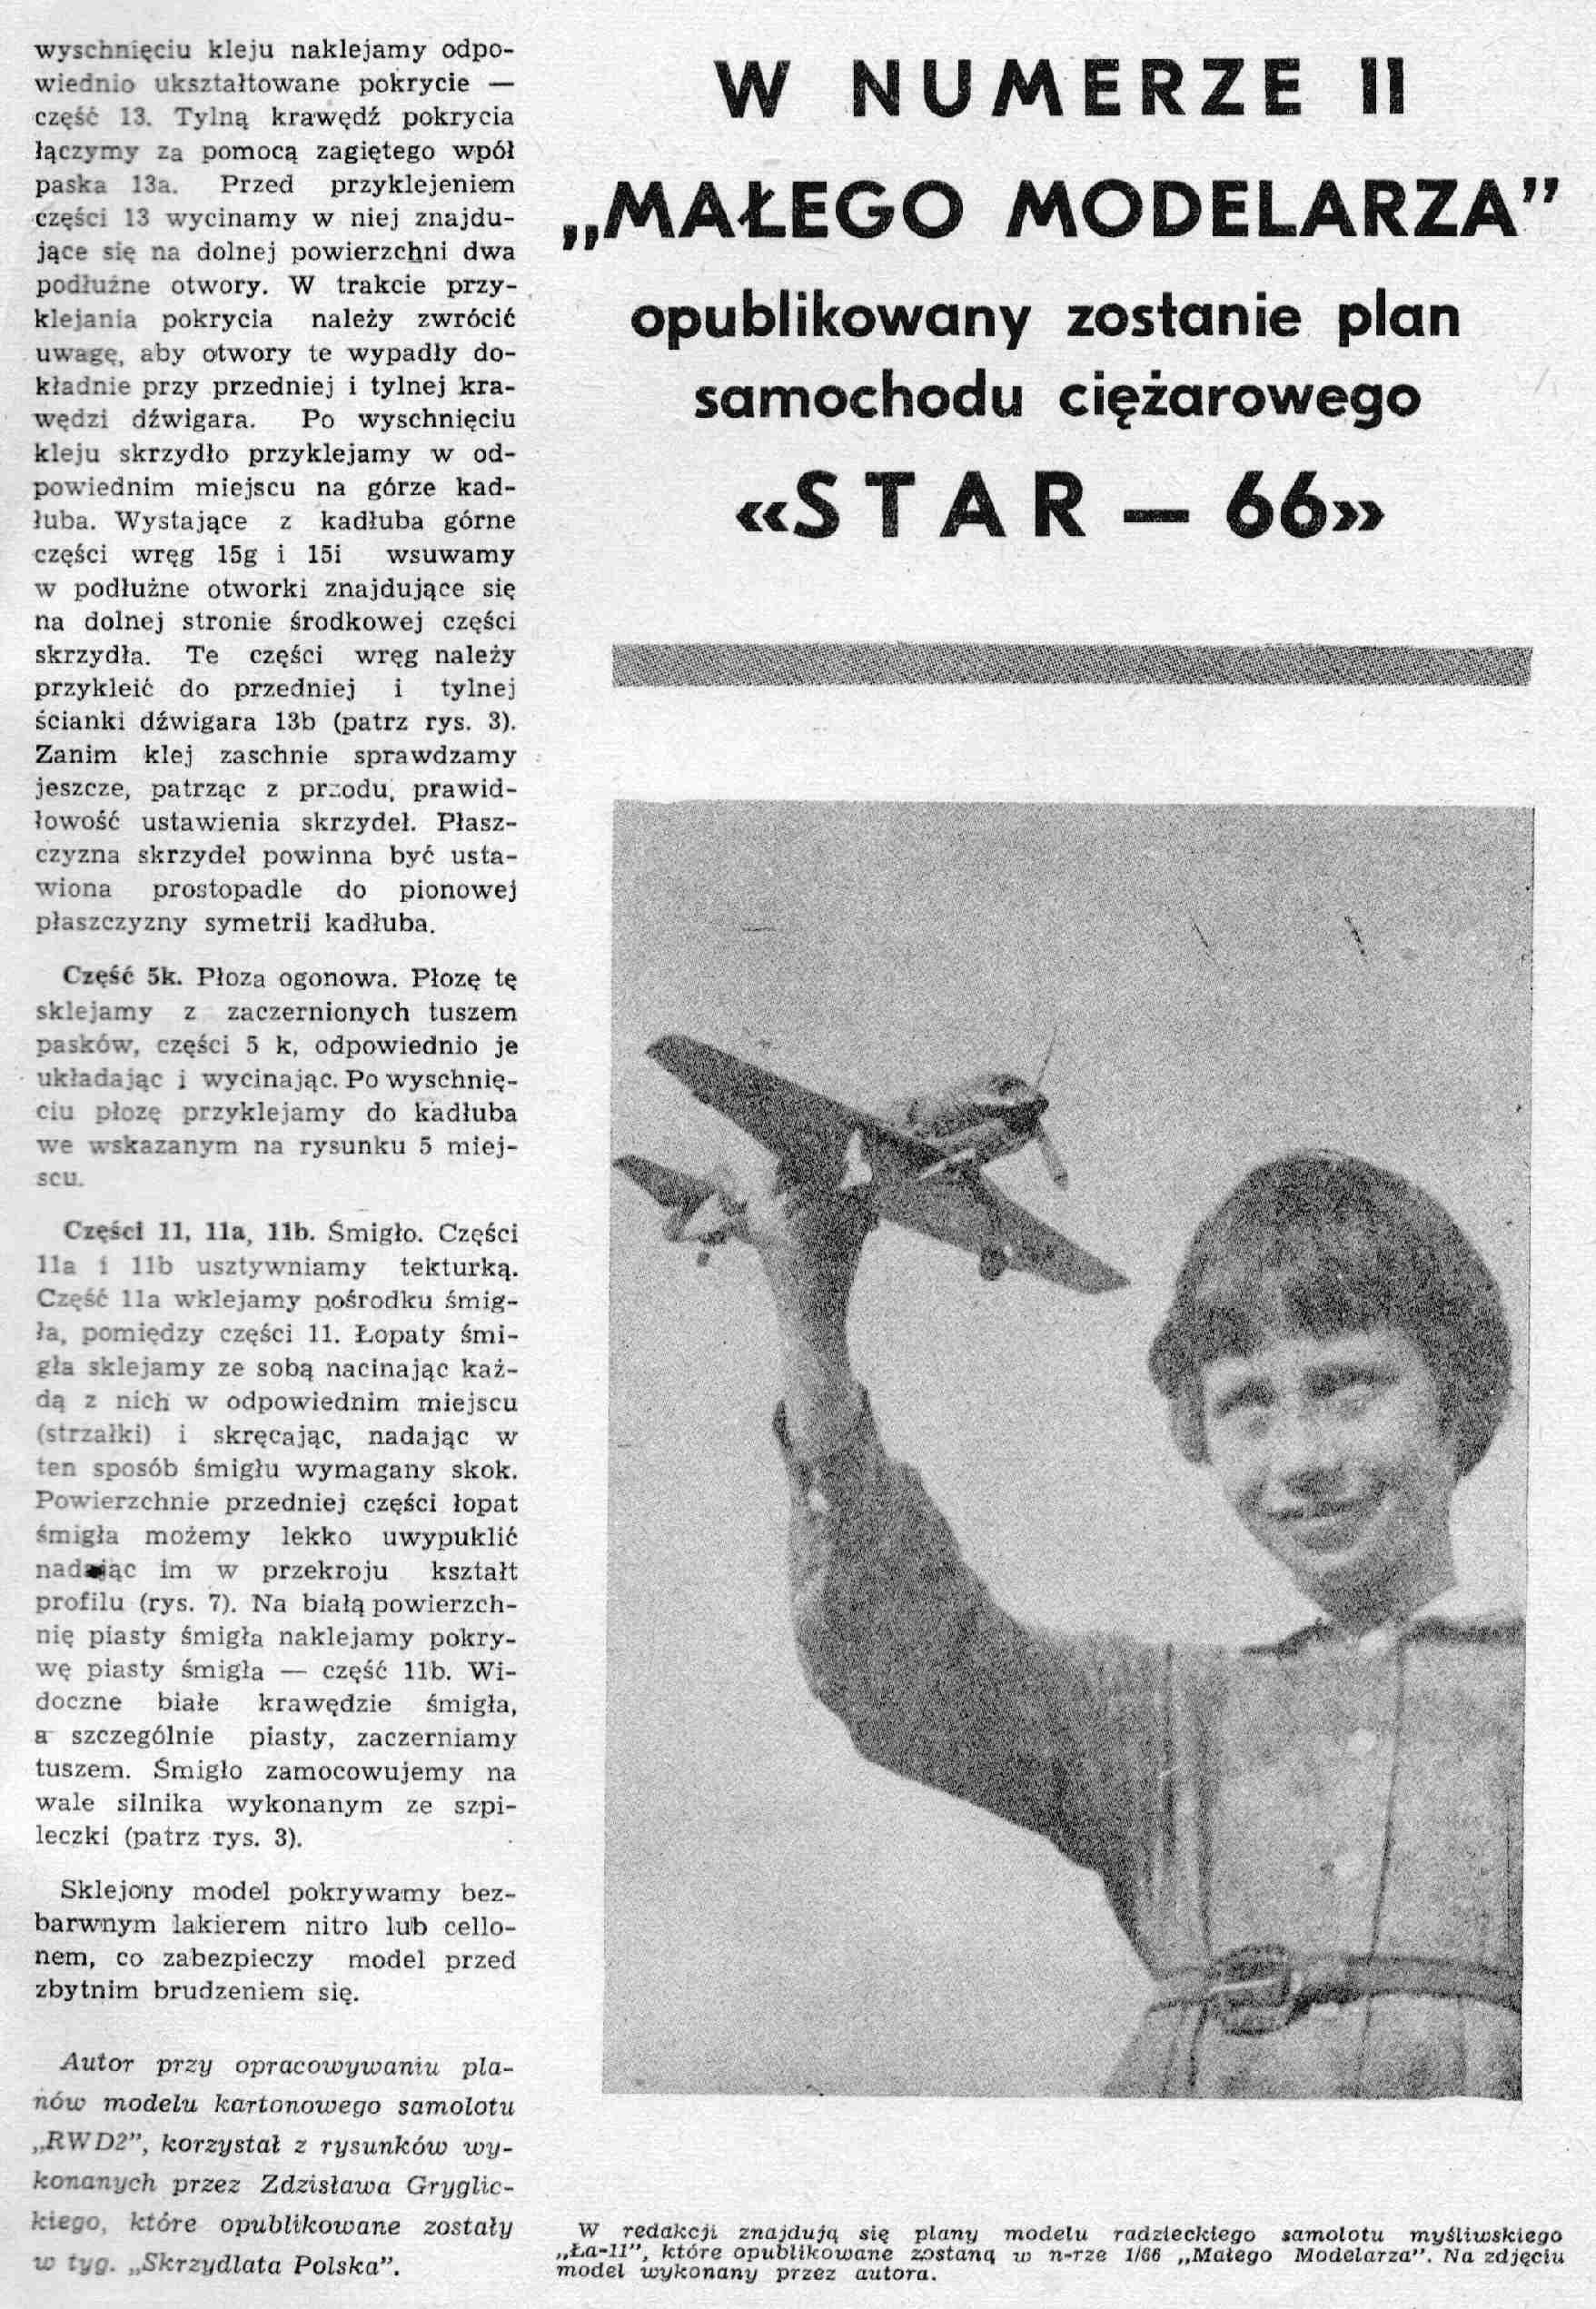 "Maly Modelarz" 10, 1965, 7 c.